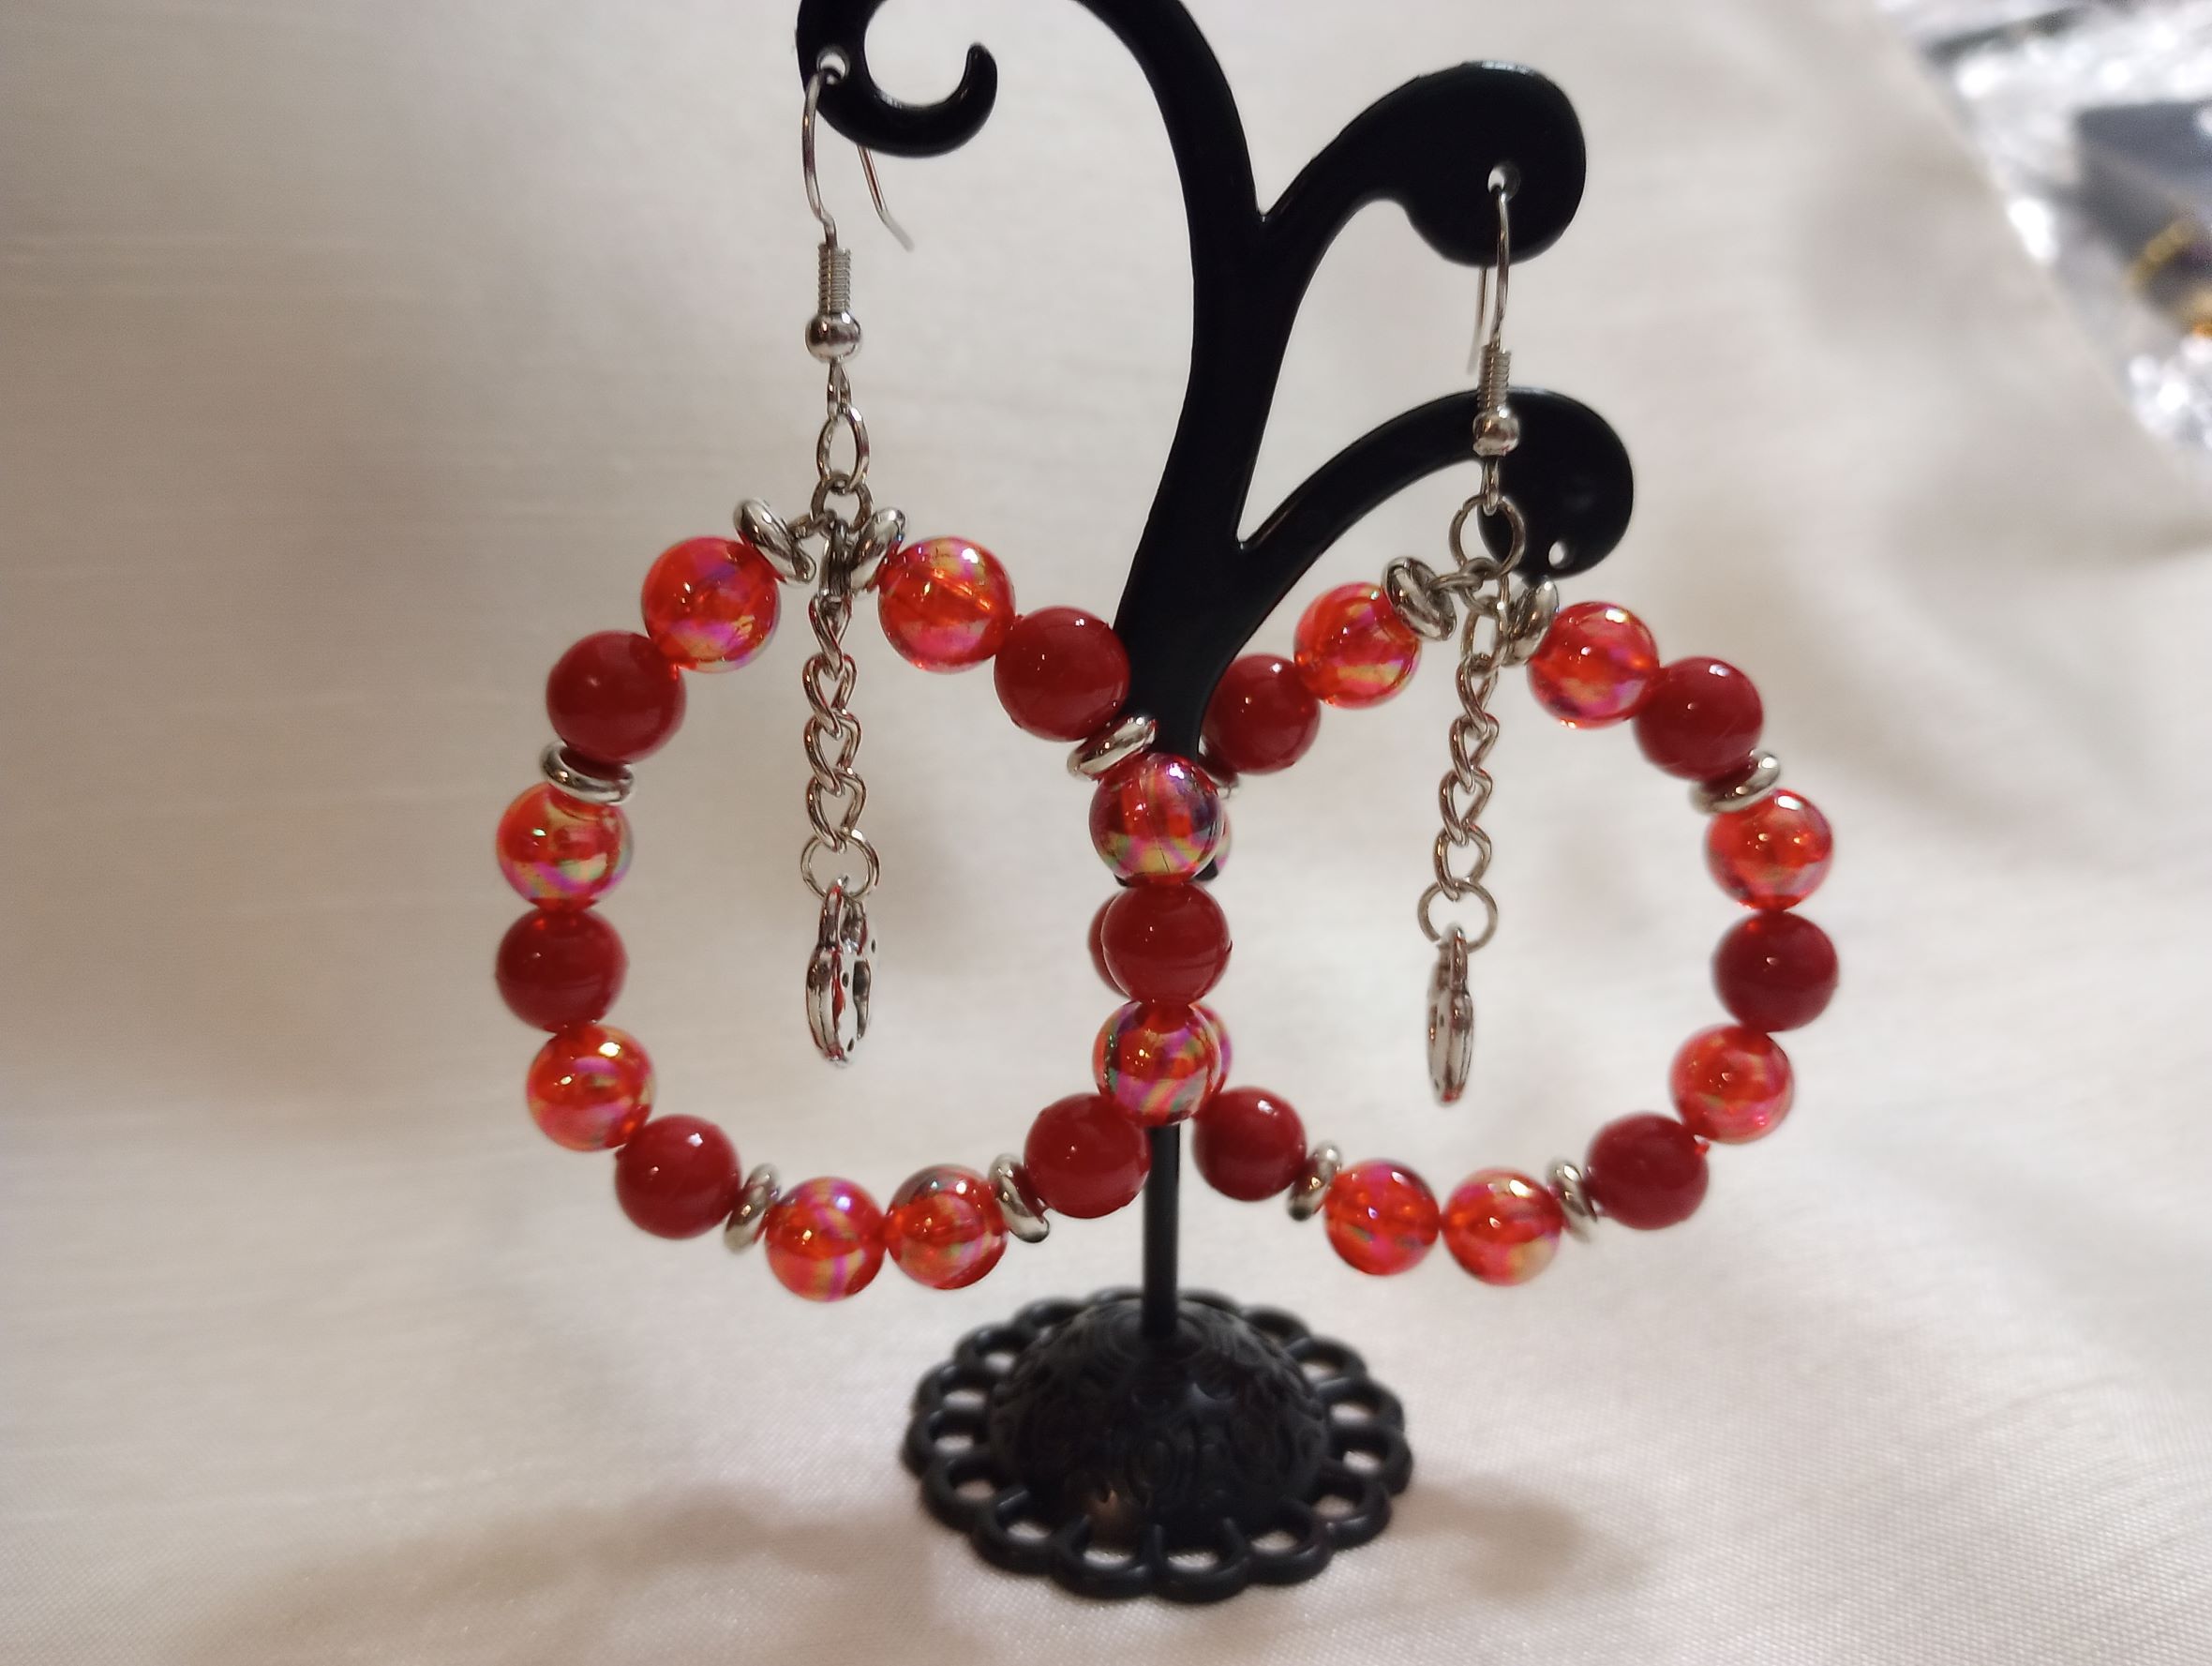 A – Red Bulb Earrings